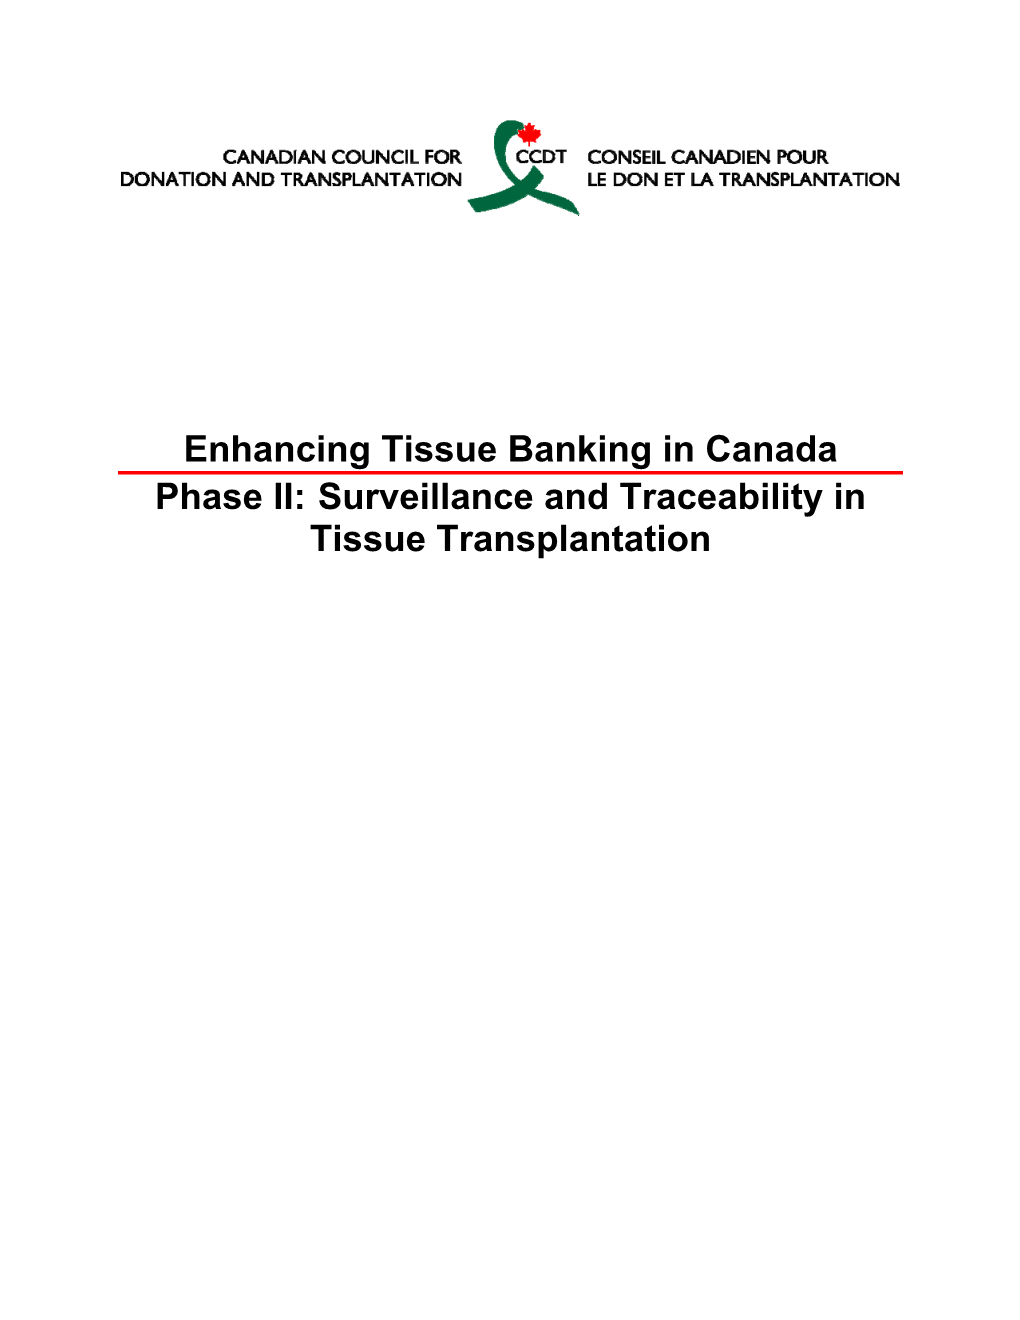 Surveillance and Traceability in Tissue Transplantation